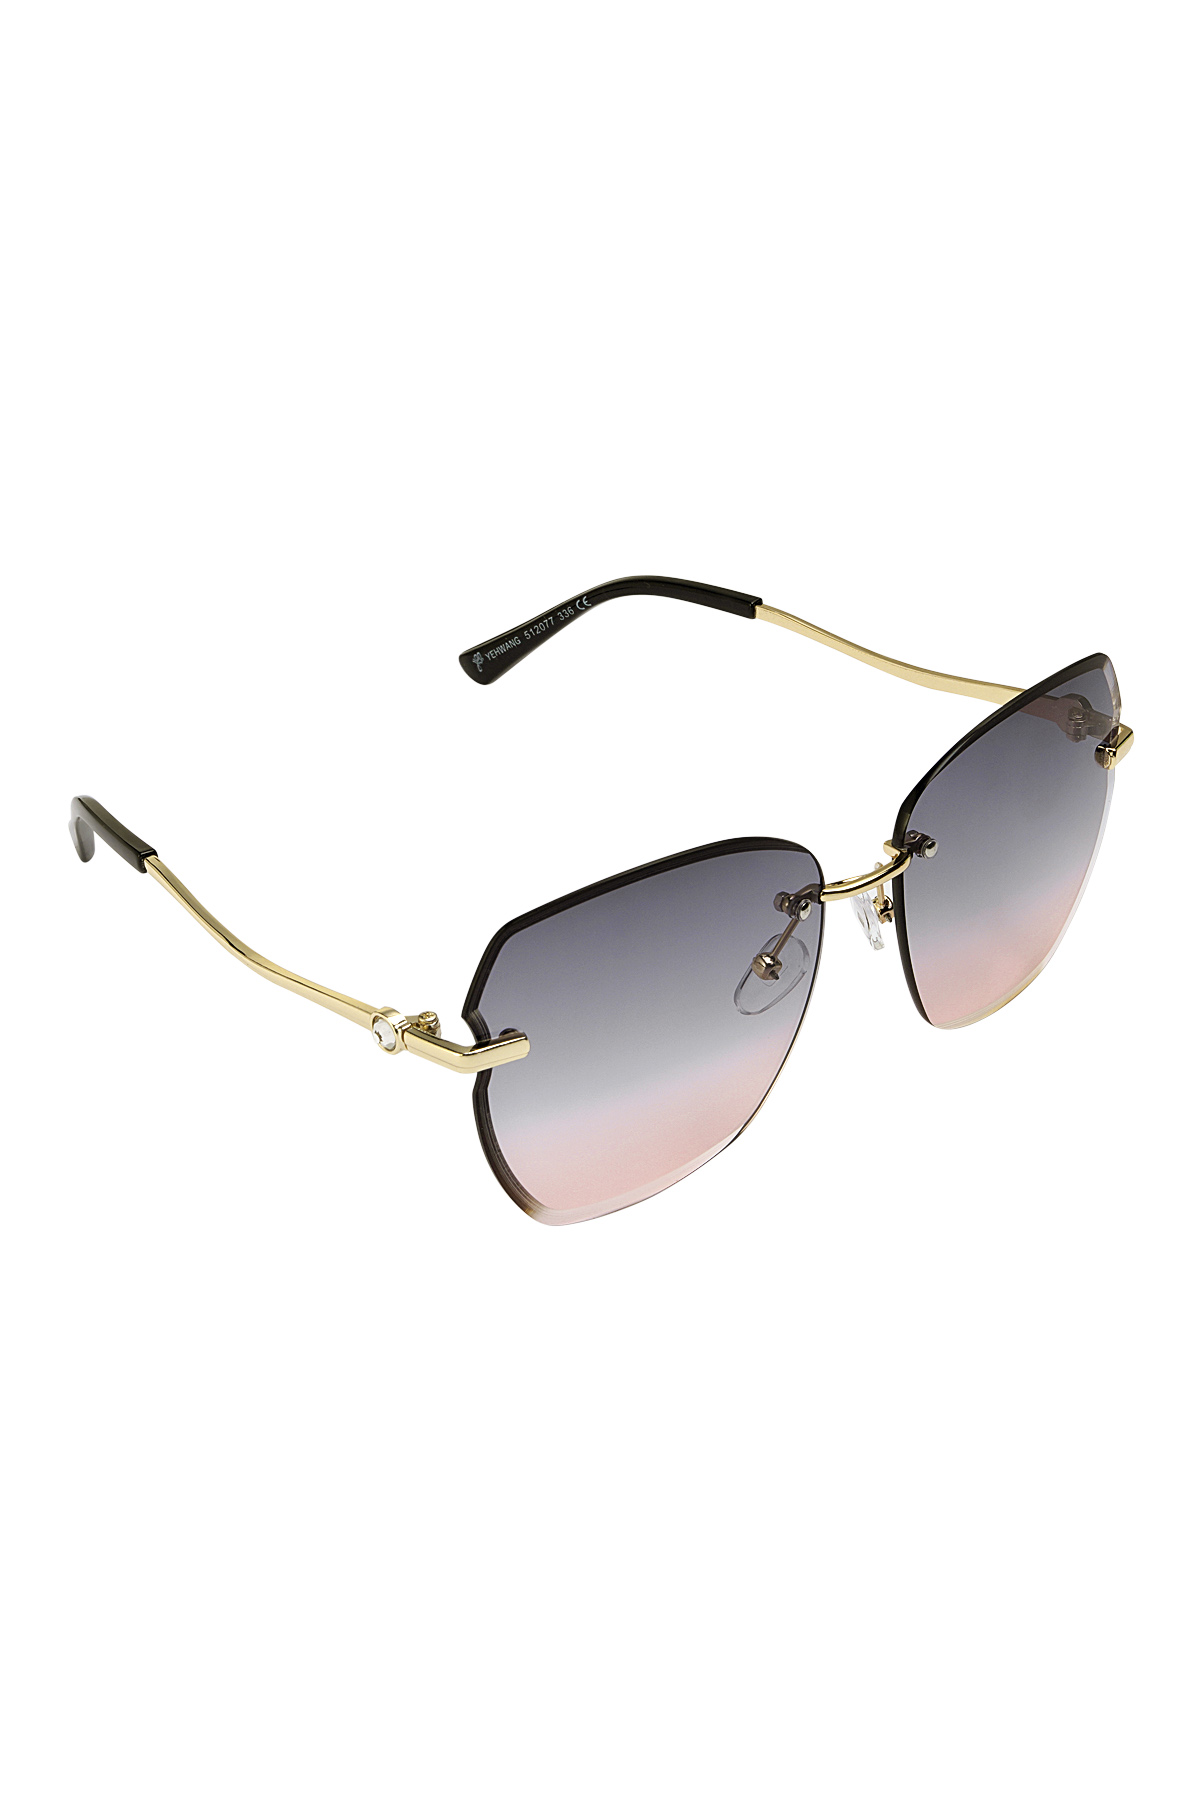 Statement sunglasses gold hardware - rose gold